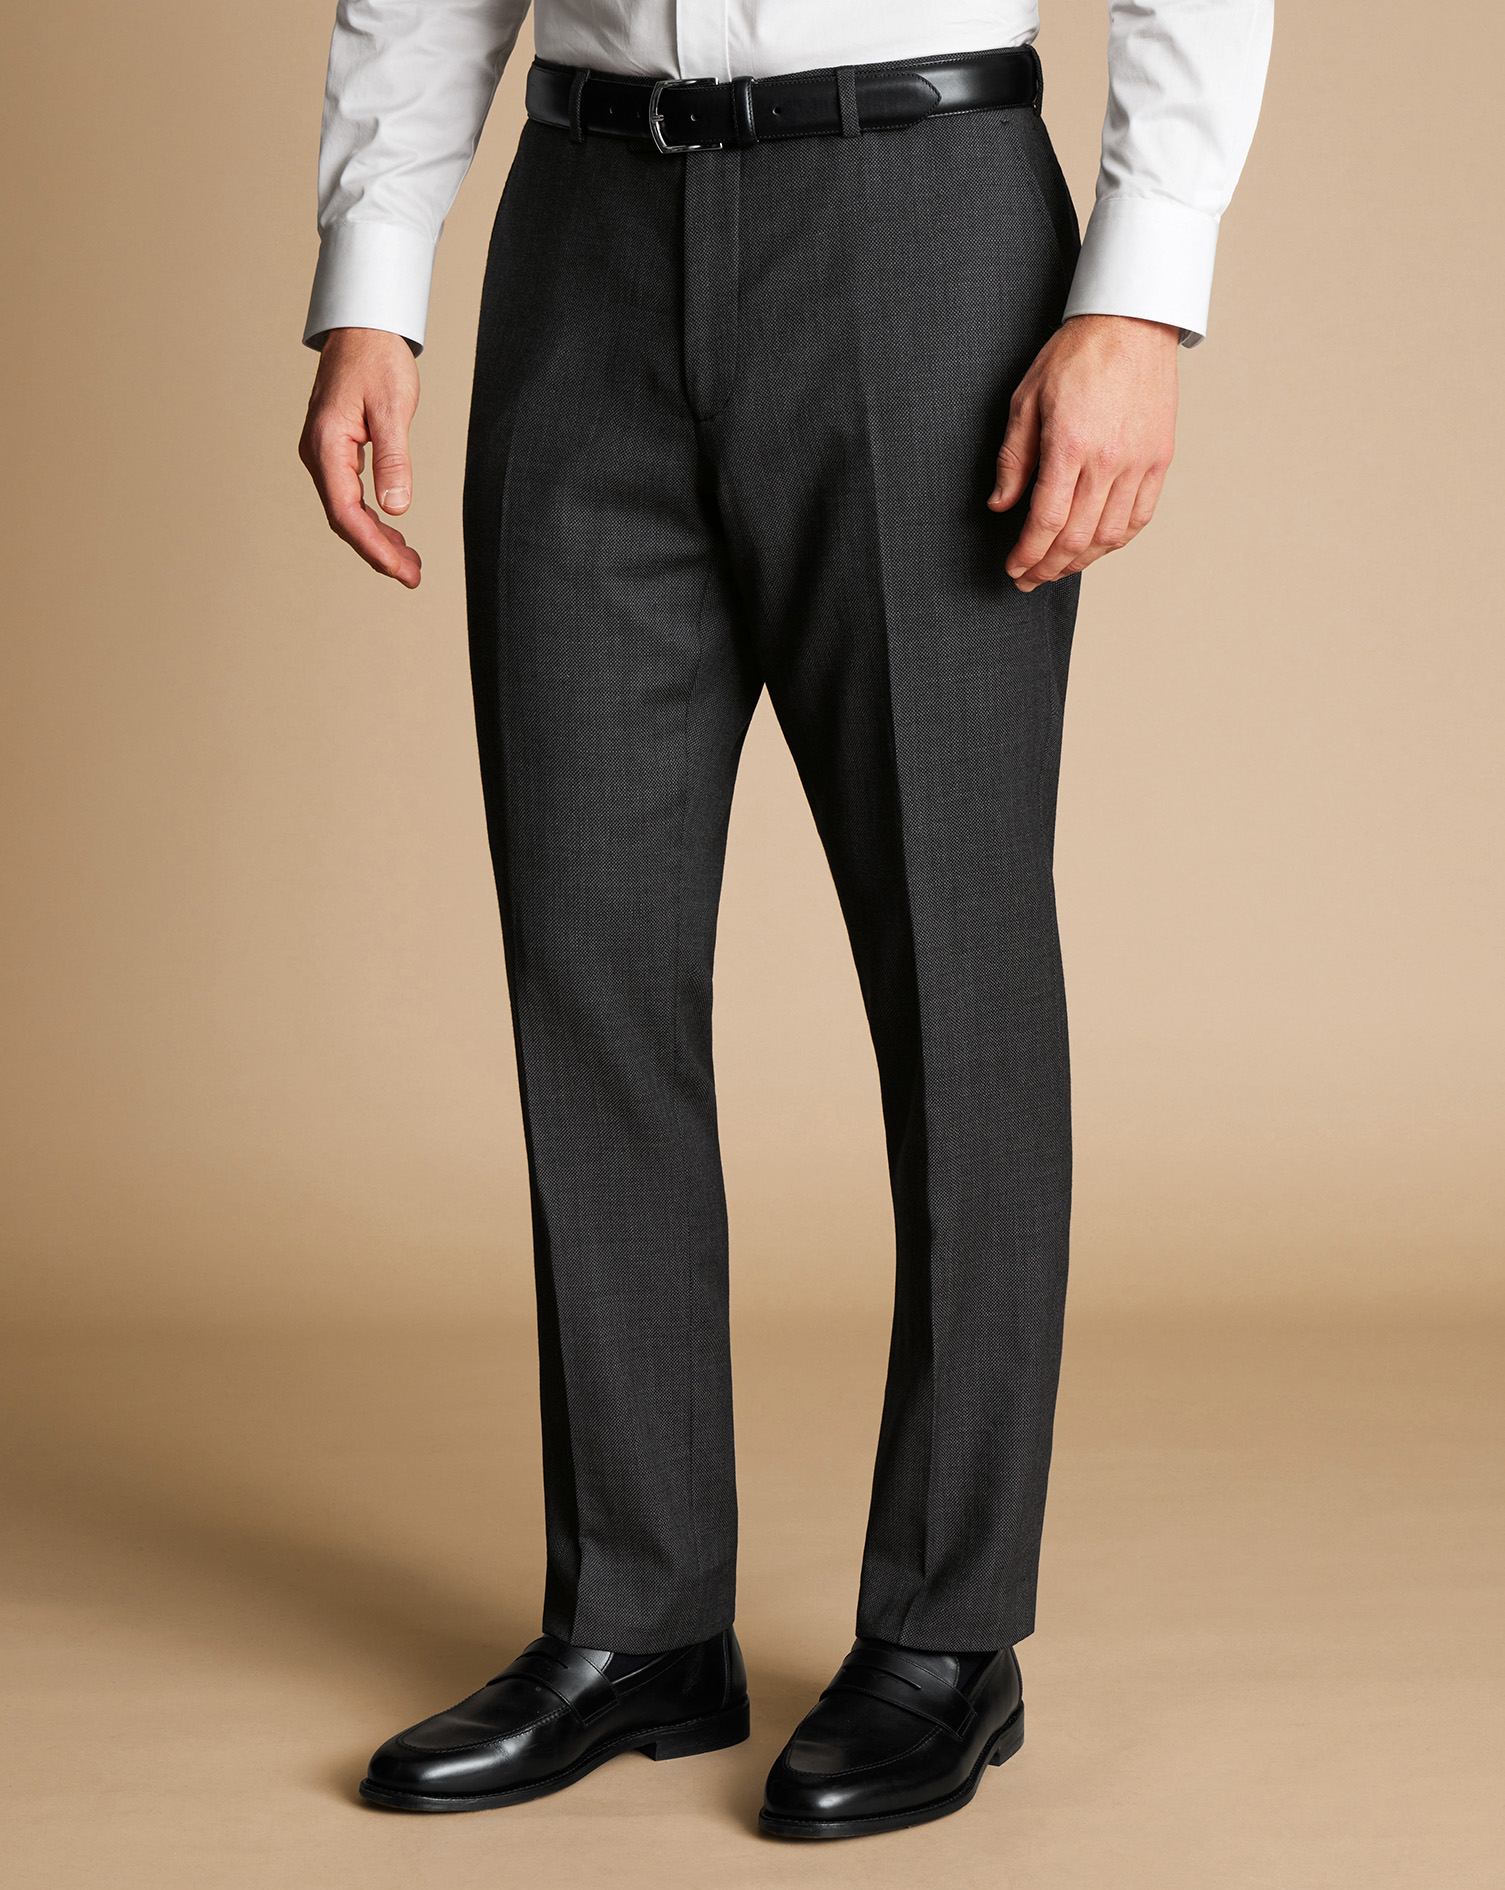 Men's Charles Tyrwhitt Ultimate Performance Birdseye Suit Trousers - Grey Size 32/30 Wool
